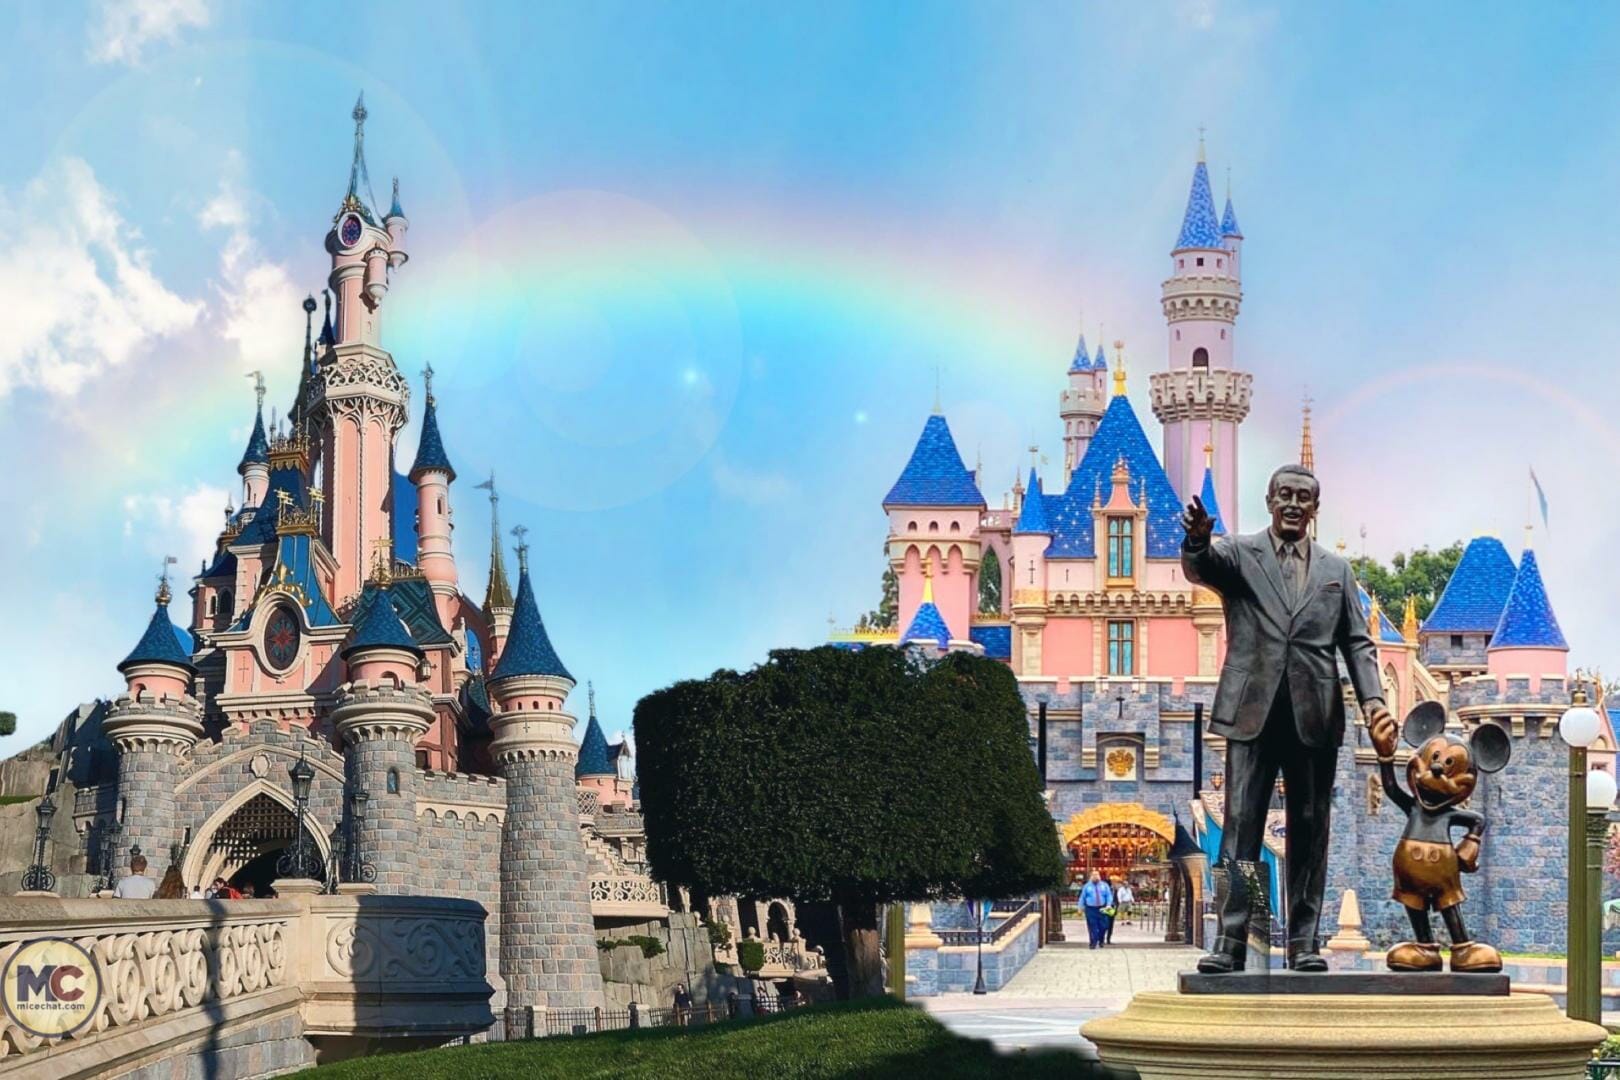 Is Disneyland in California or Paris?